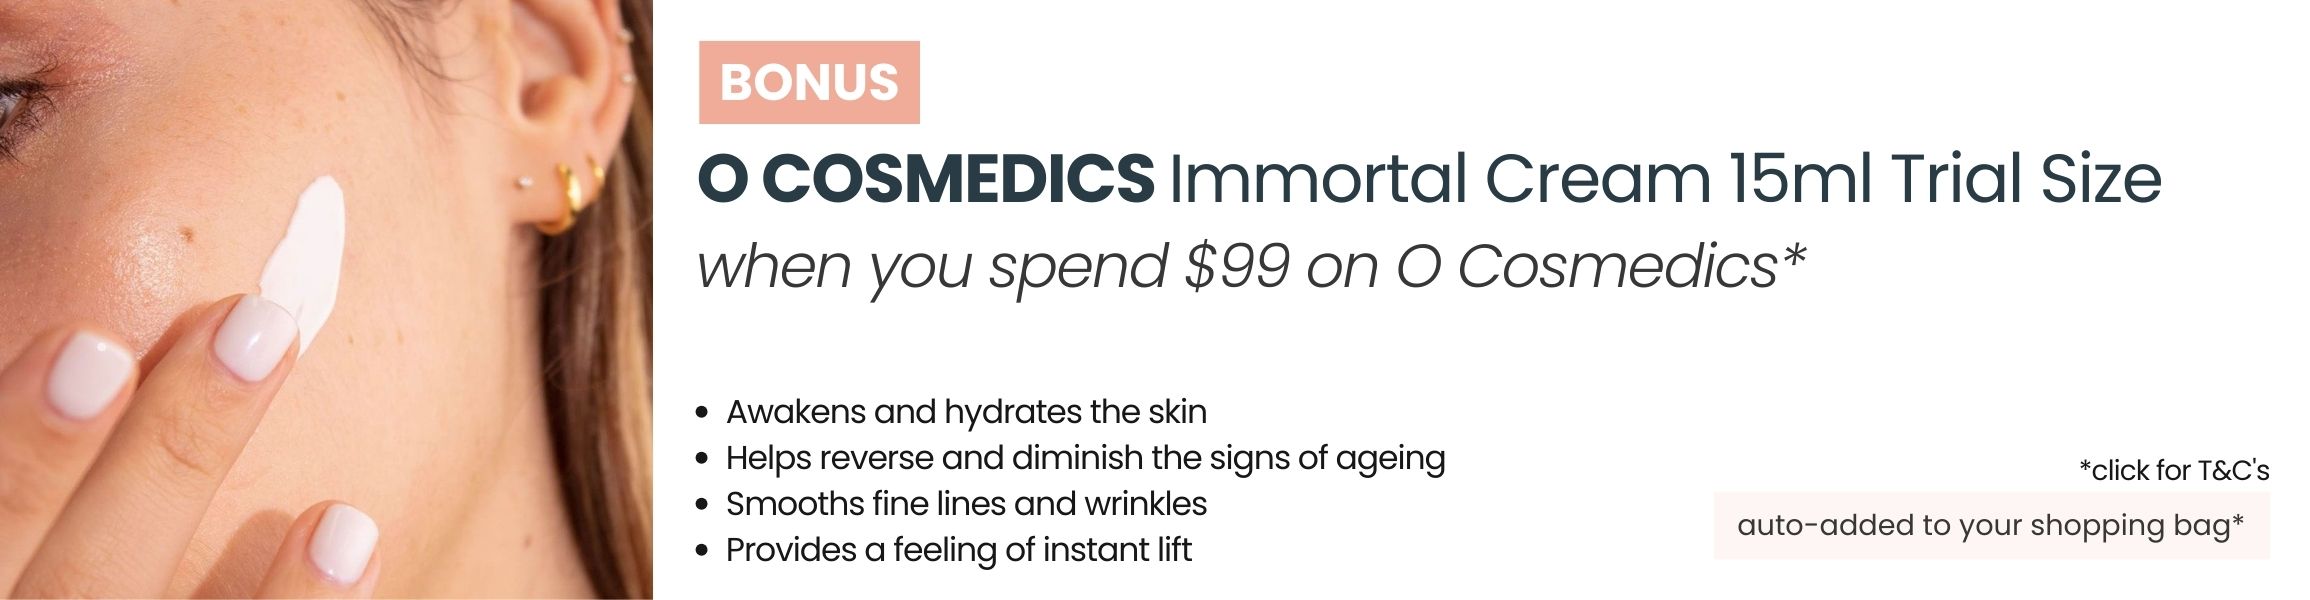 BONUS O Cosmedics Immortal Cream 15ml Trial Size when you spend $99 on O Cosmedics products